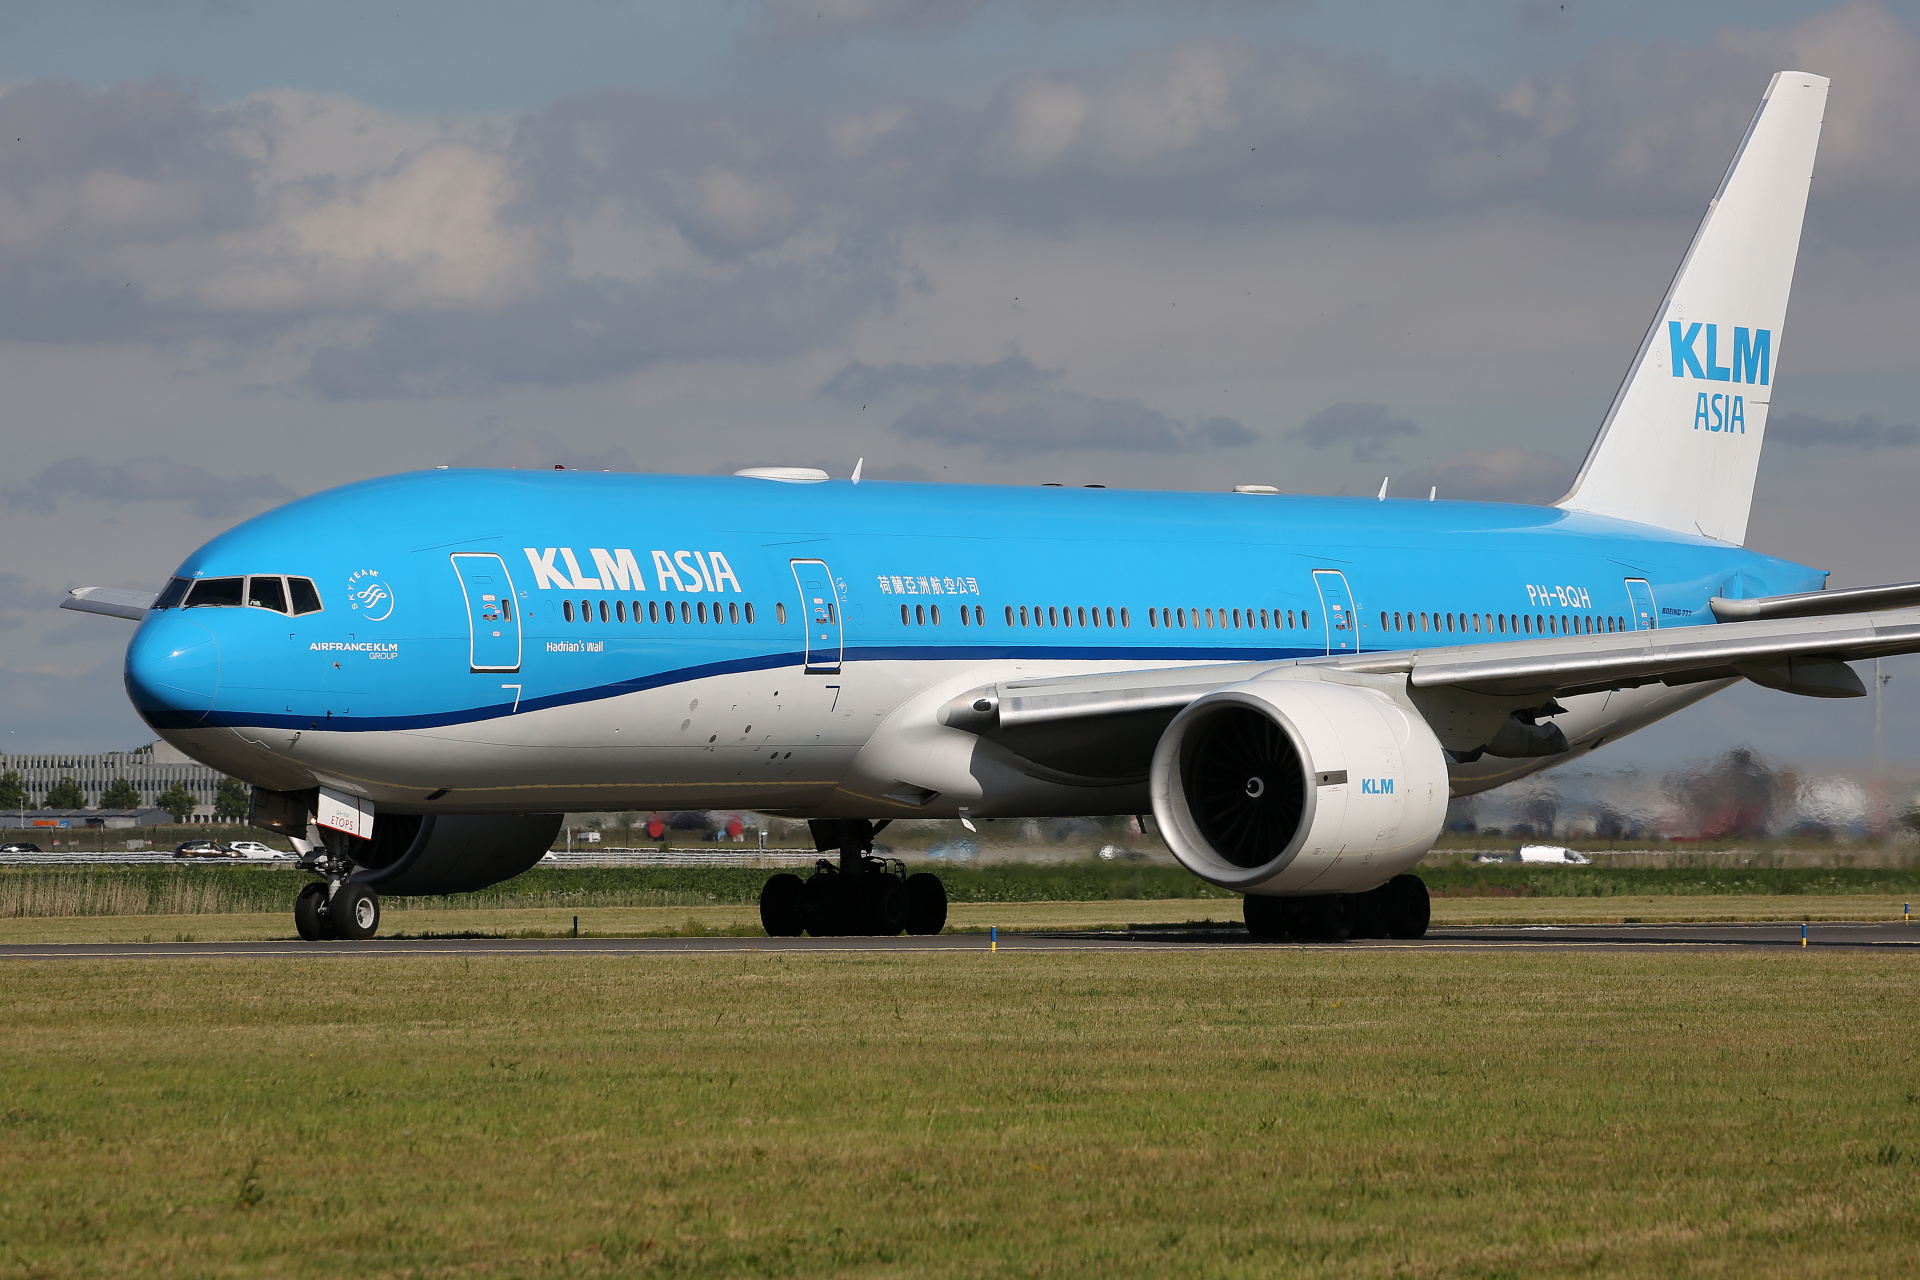 PH-BQH (KLM Asia livery) (Aircraft » Schiphol Spotting » Boeing 777-200/-ER » KLM Royal Dutch Airlines)